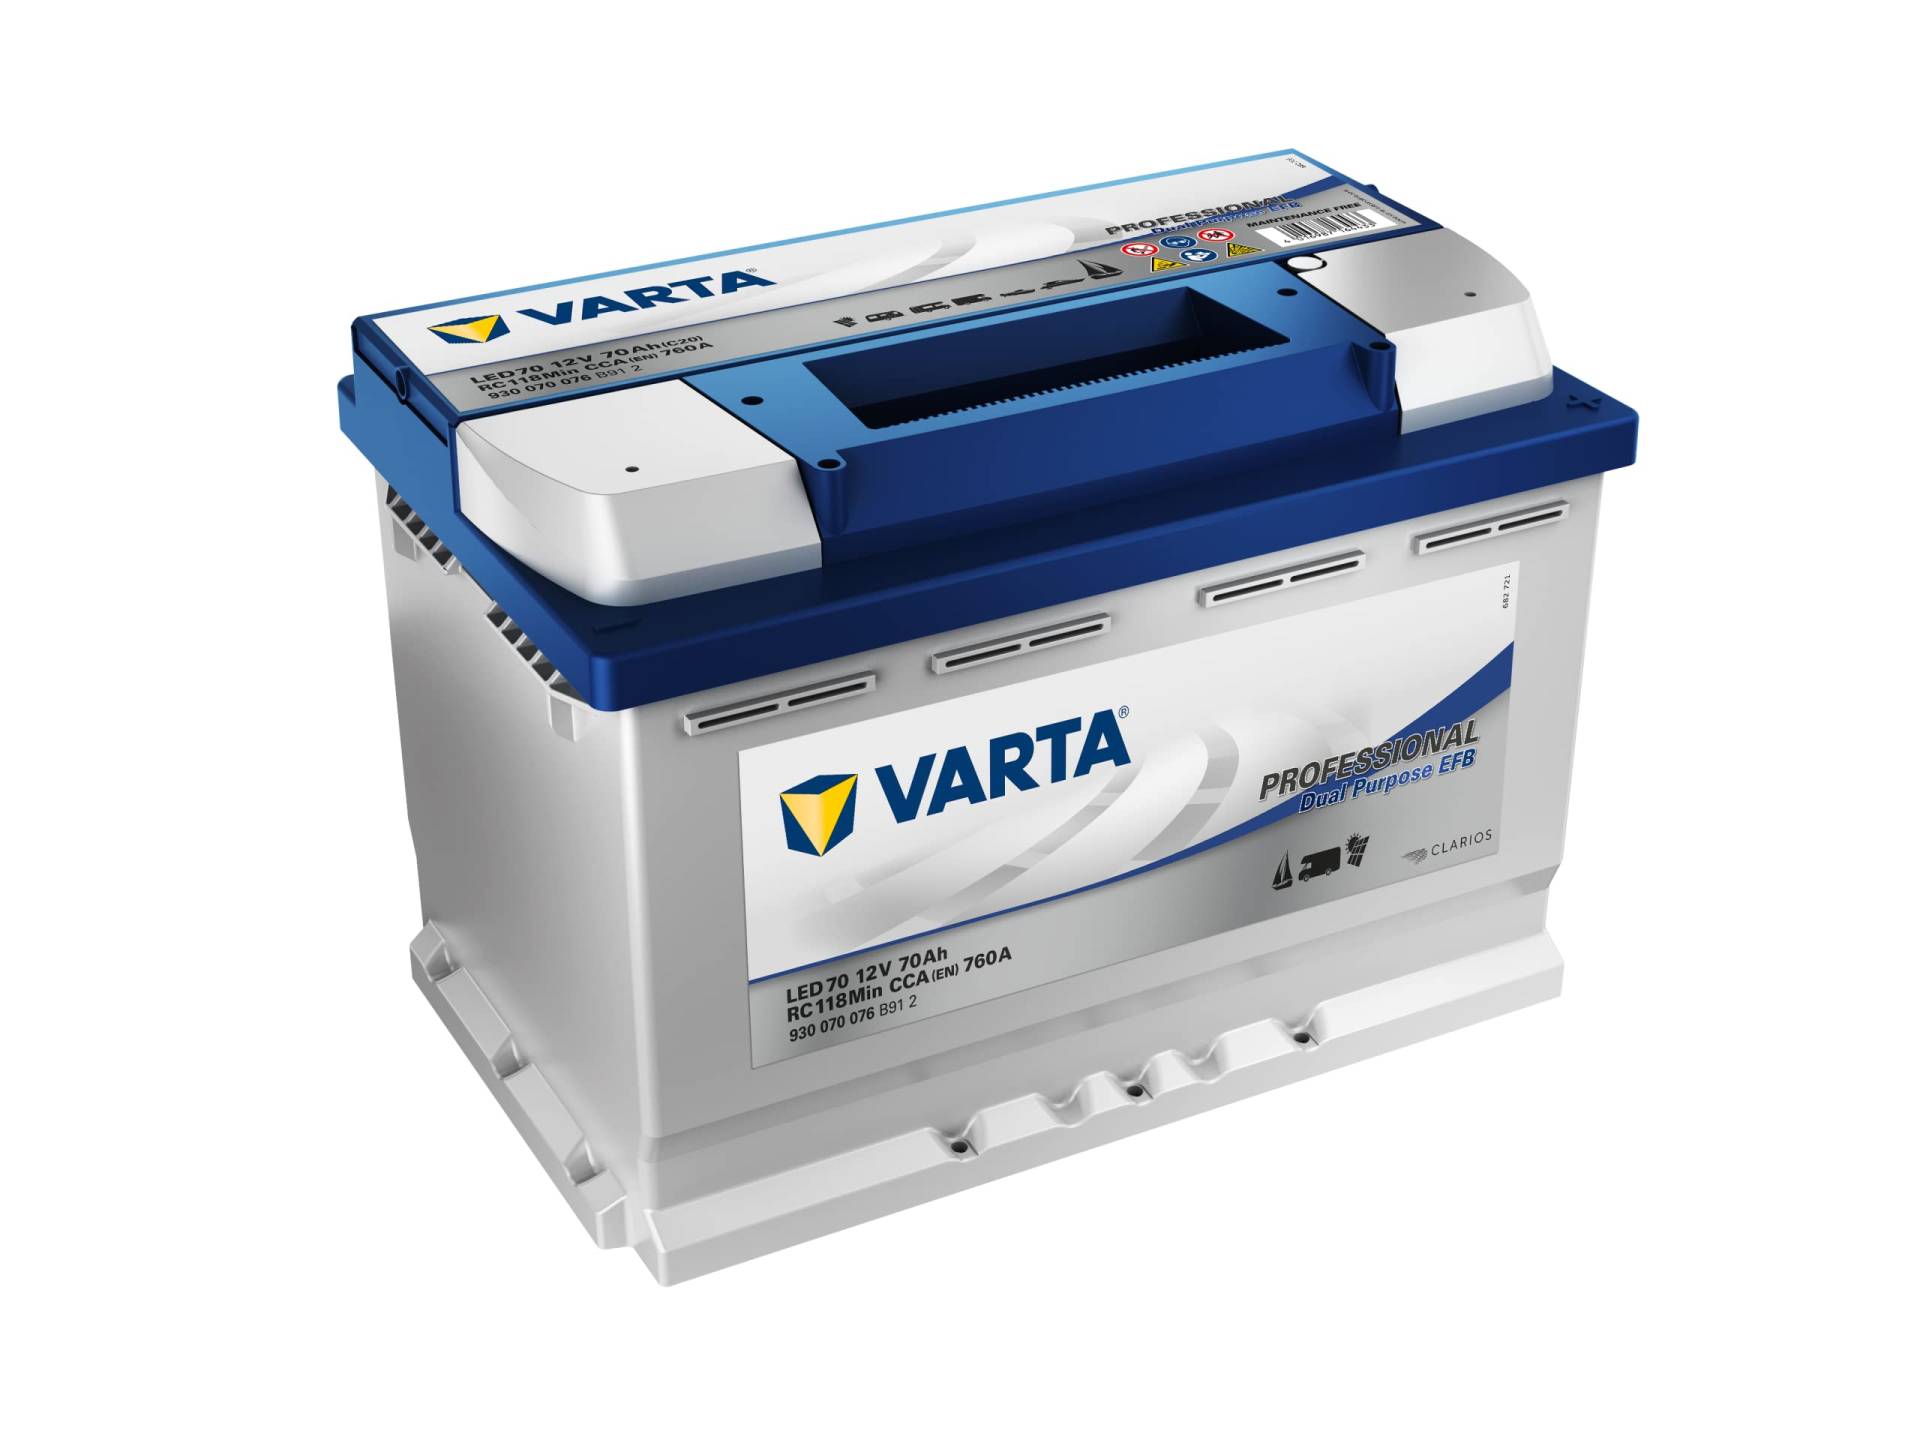 Varta Professional Dual Purpose EFB LED 70 12V 70AH 760 Amp von Varta